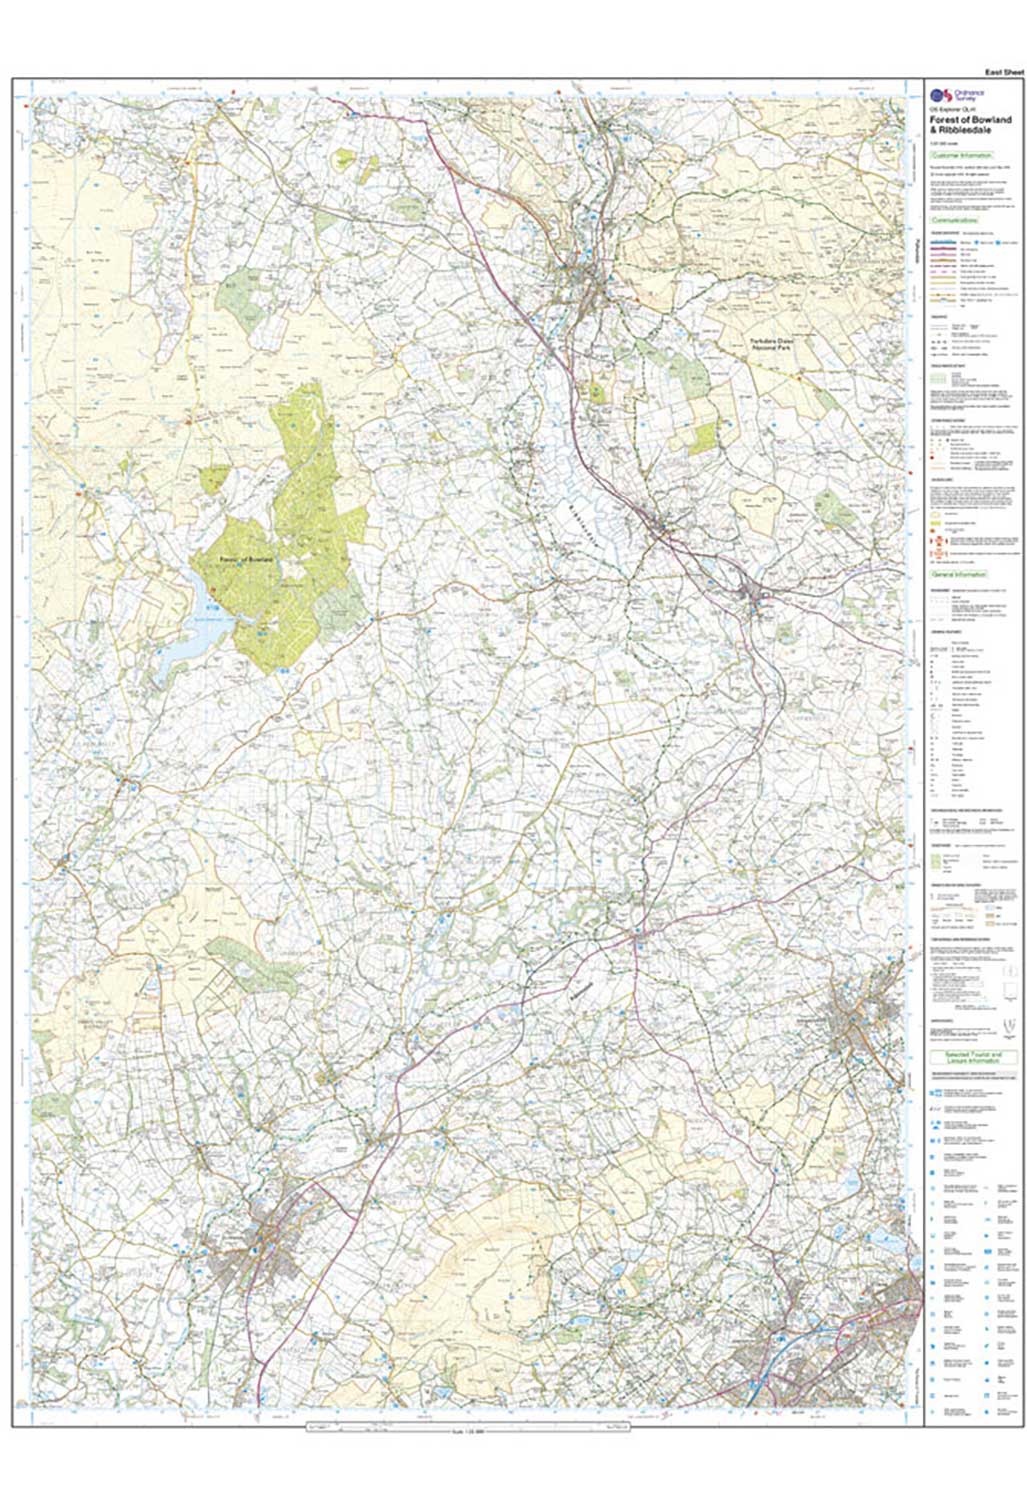 Ordnance Survey Forest of Bowland & Ribblesdale - OS Explorer OL41 Map